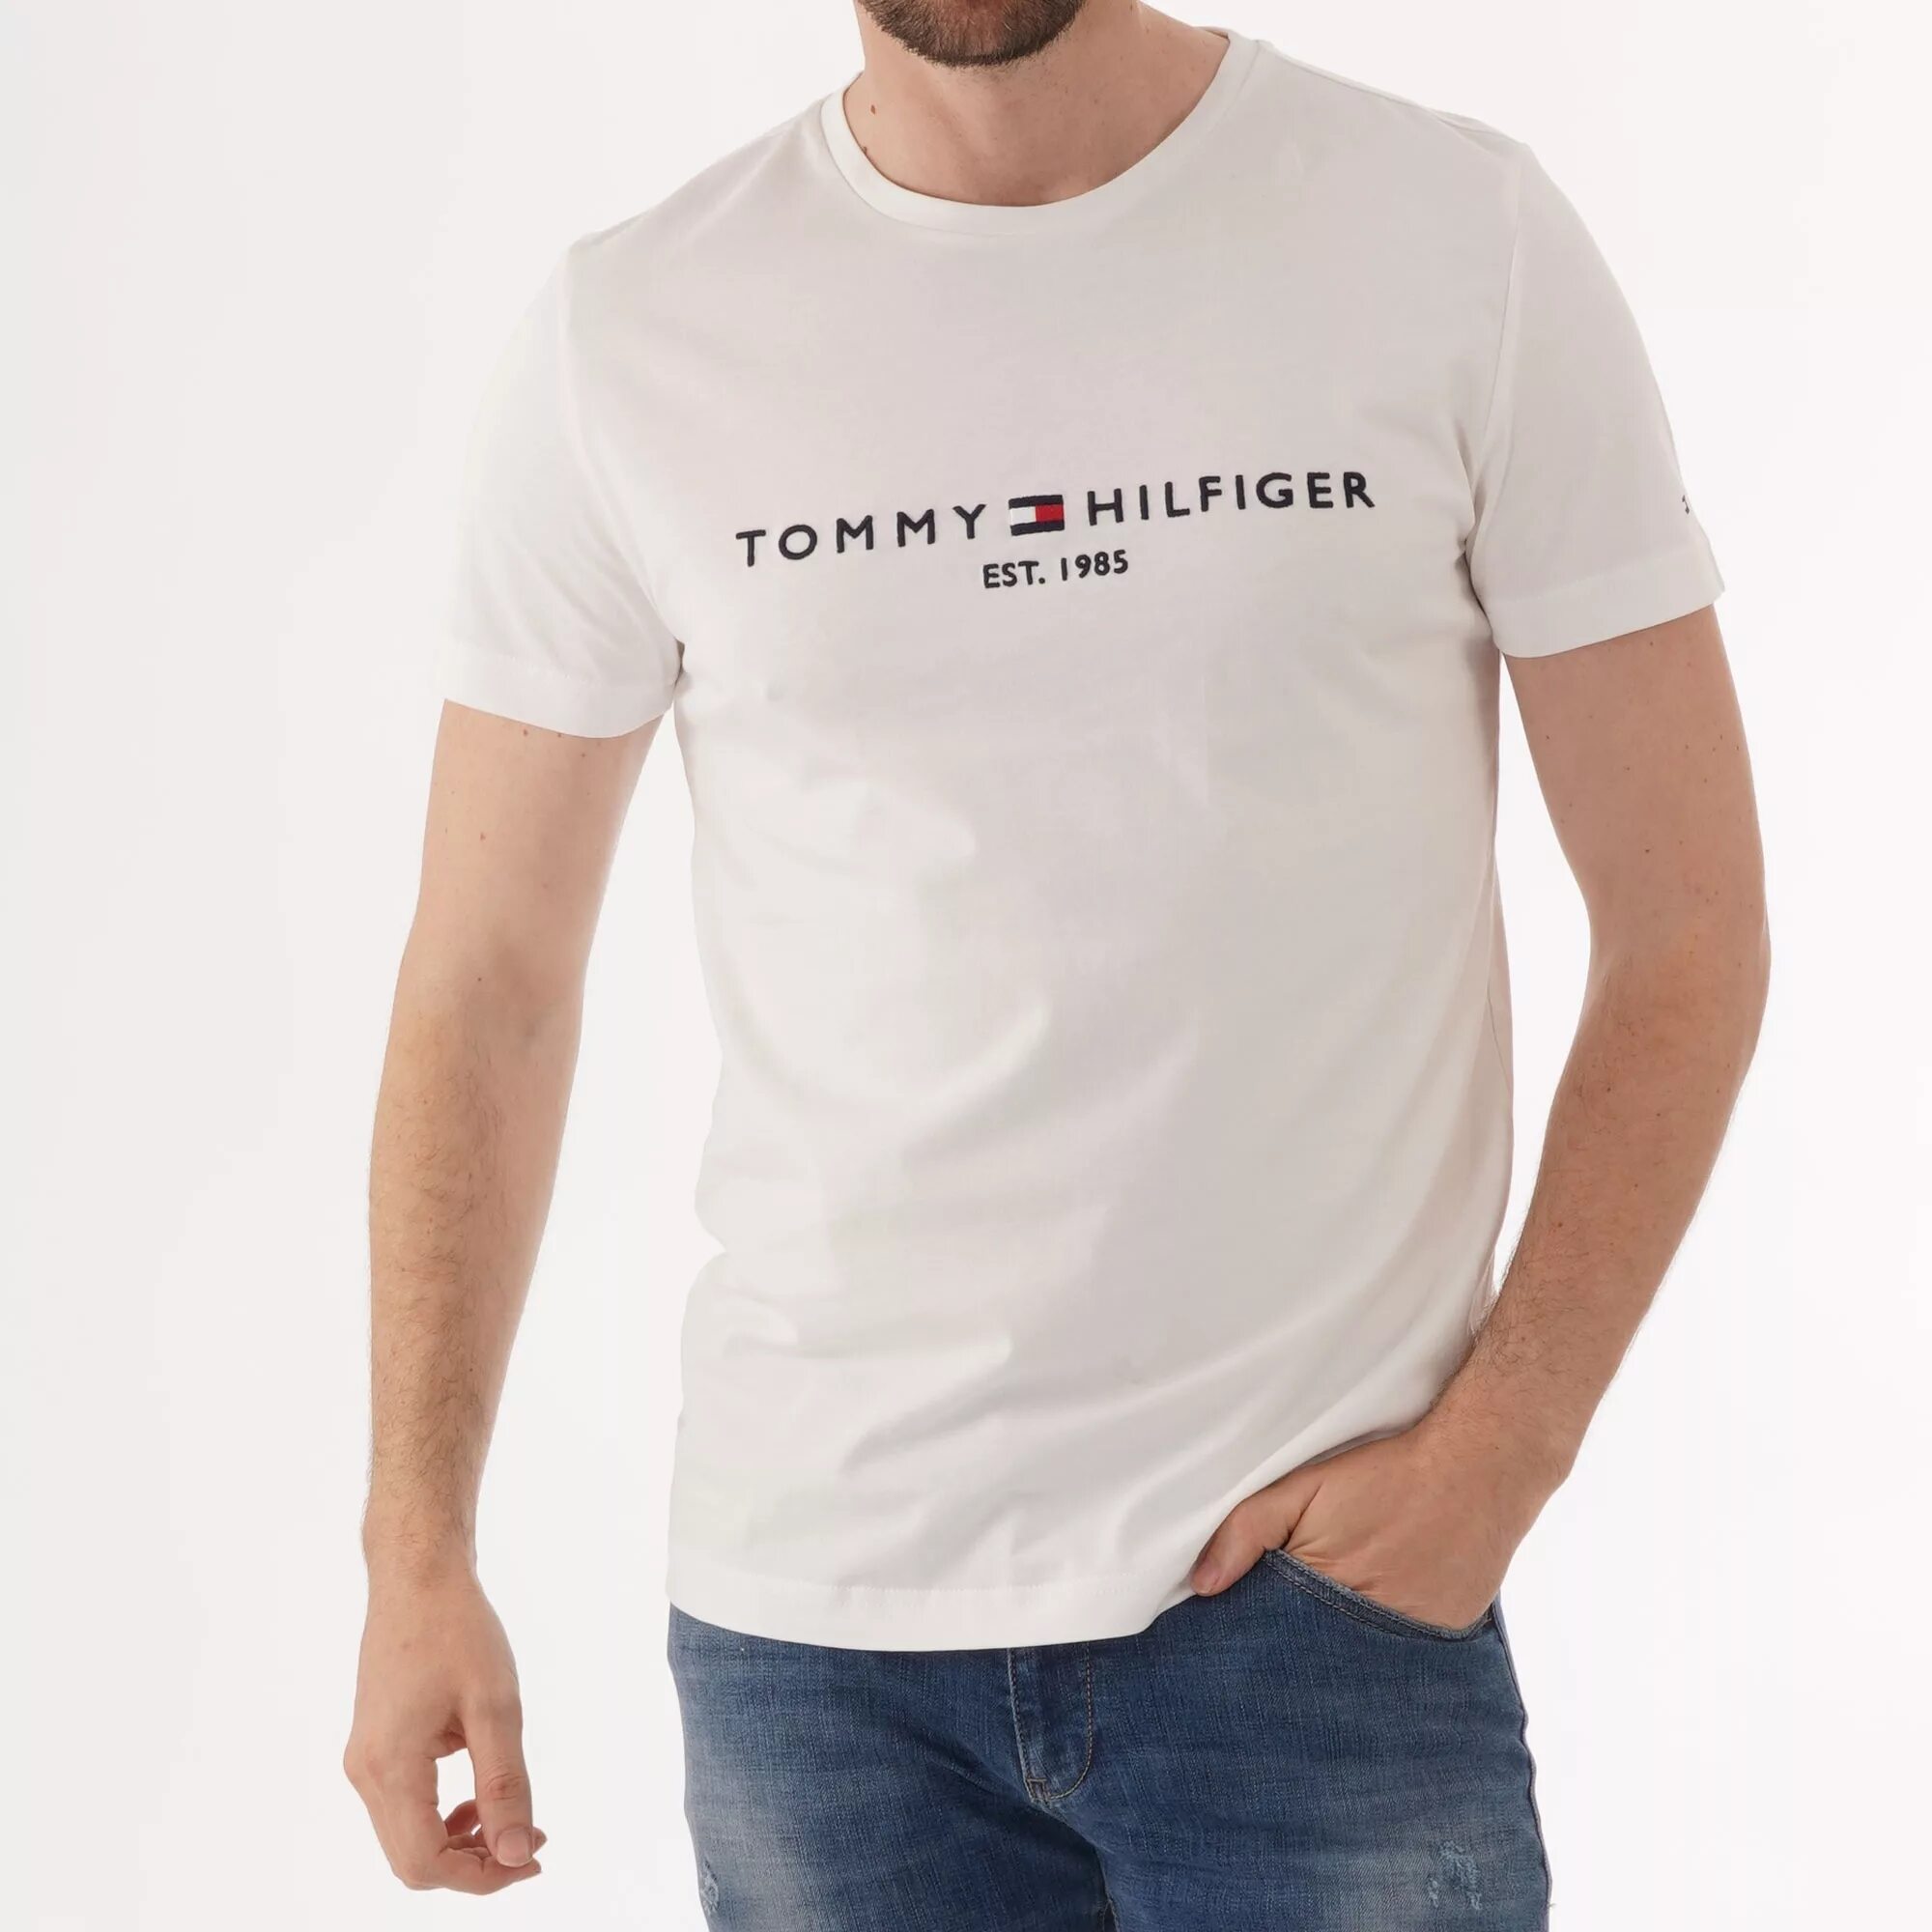 Tommy Hilfiger t Shirt. Raglan t-Shirt Tommy Hilfiger. Tommy Hilfiger Regular Fit Crew t-Shirt. Футболка Томми Хилфигер мужские бежевая.